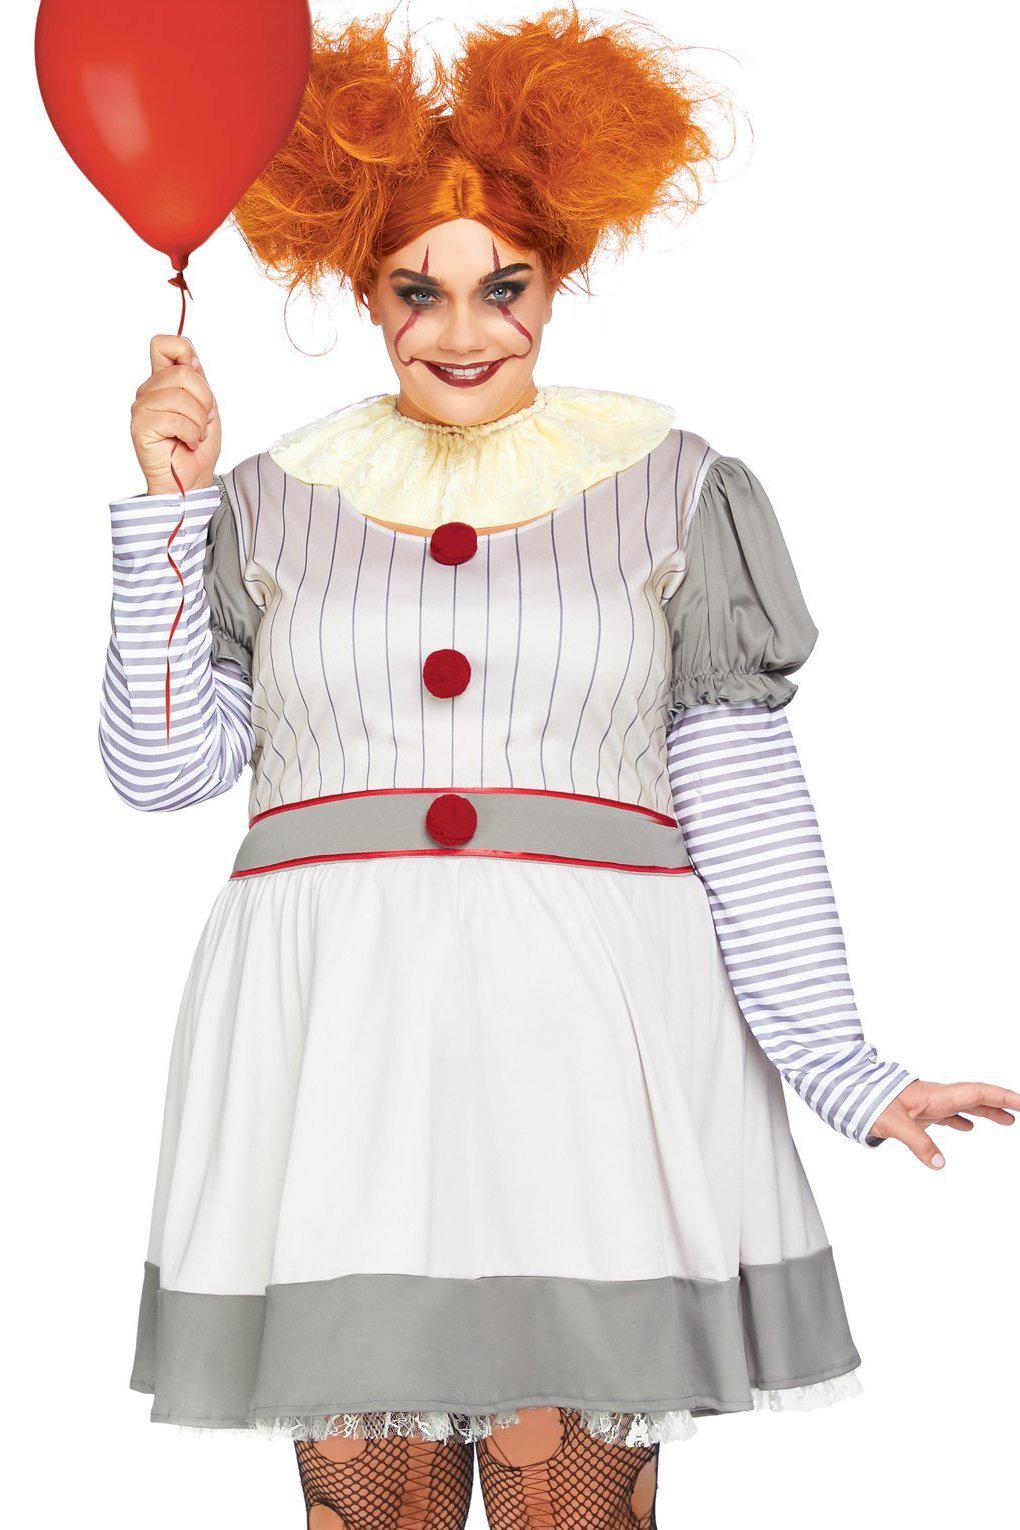 Plus Size Creepy Clown Costume-Other Costumes-Leg Avenue-Multi-1/2XL-SEXYSHOES.COM